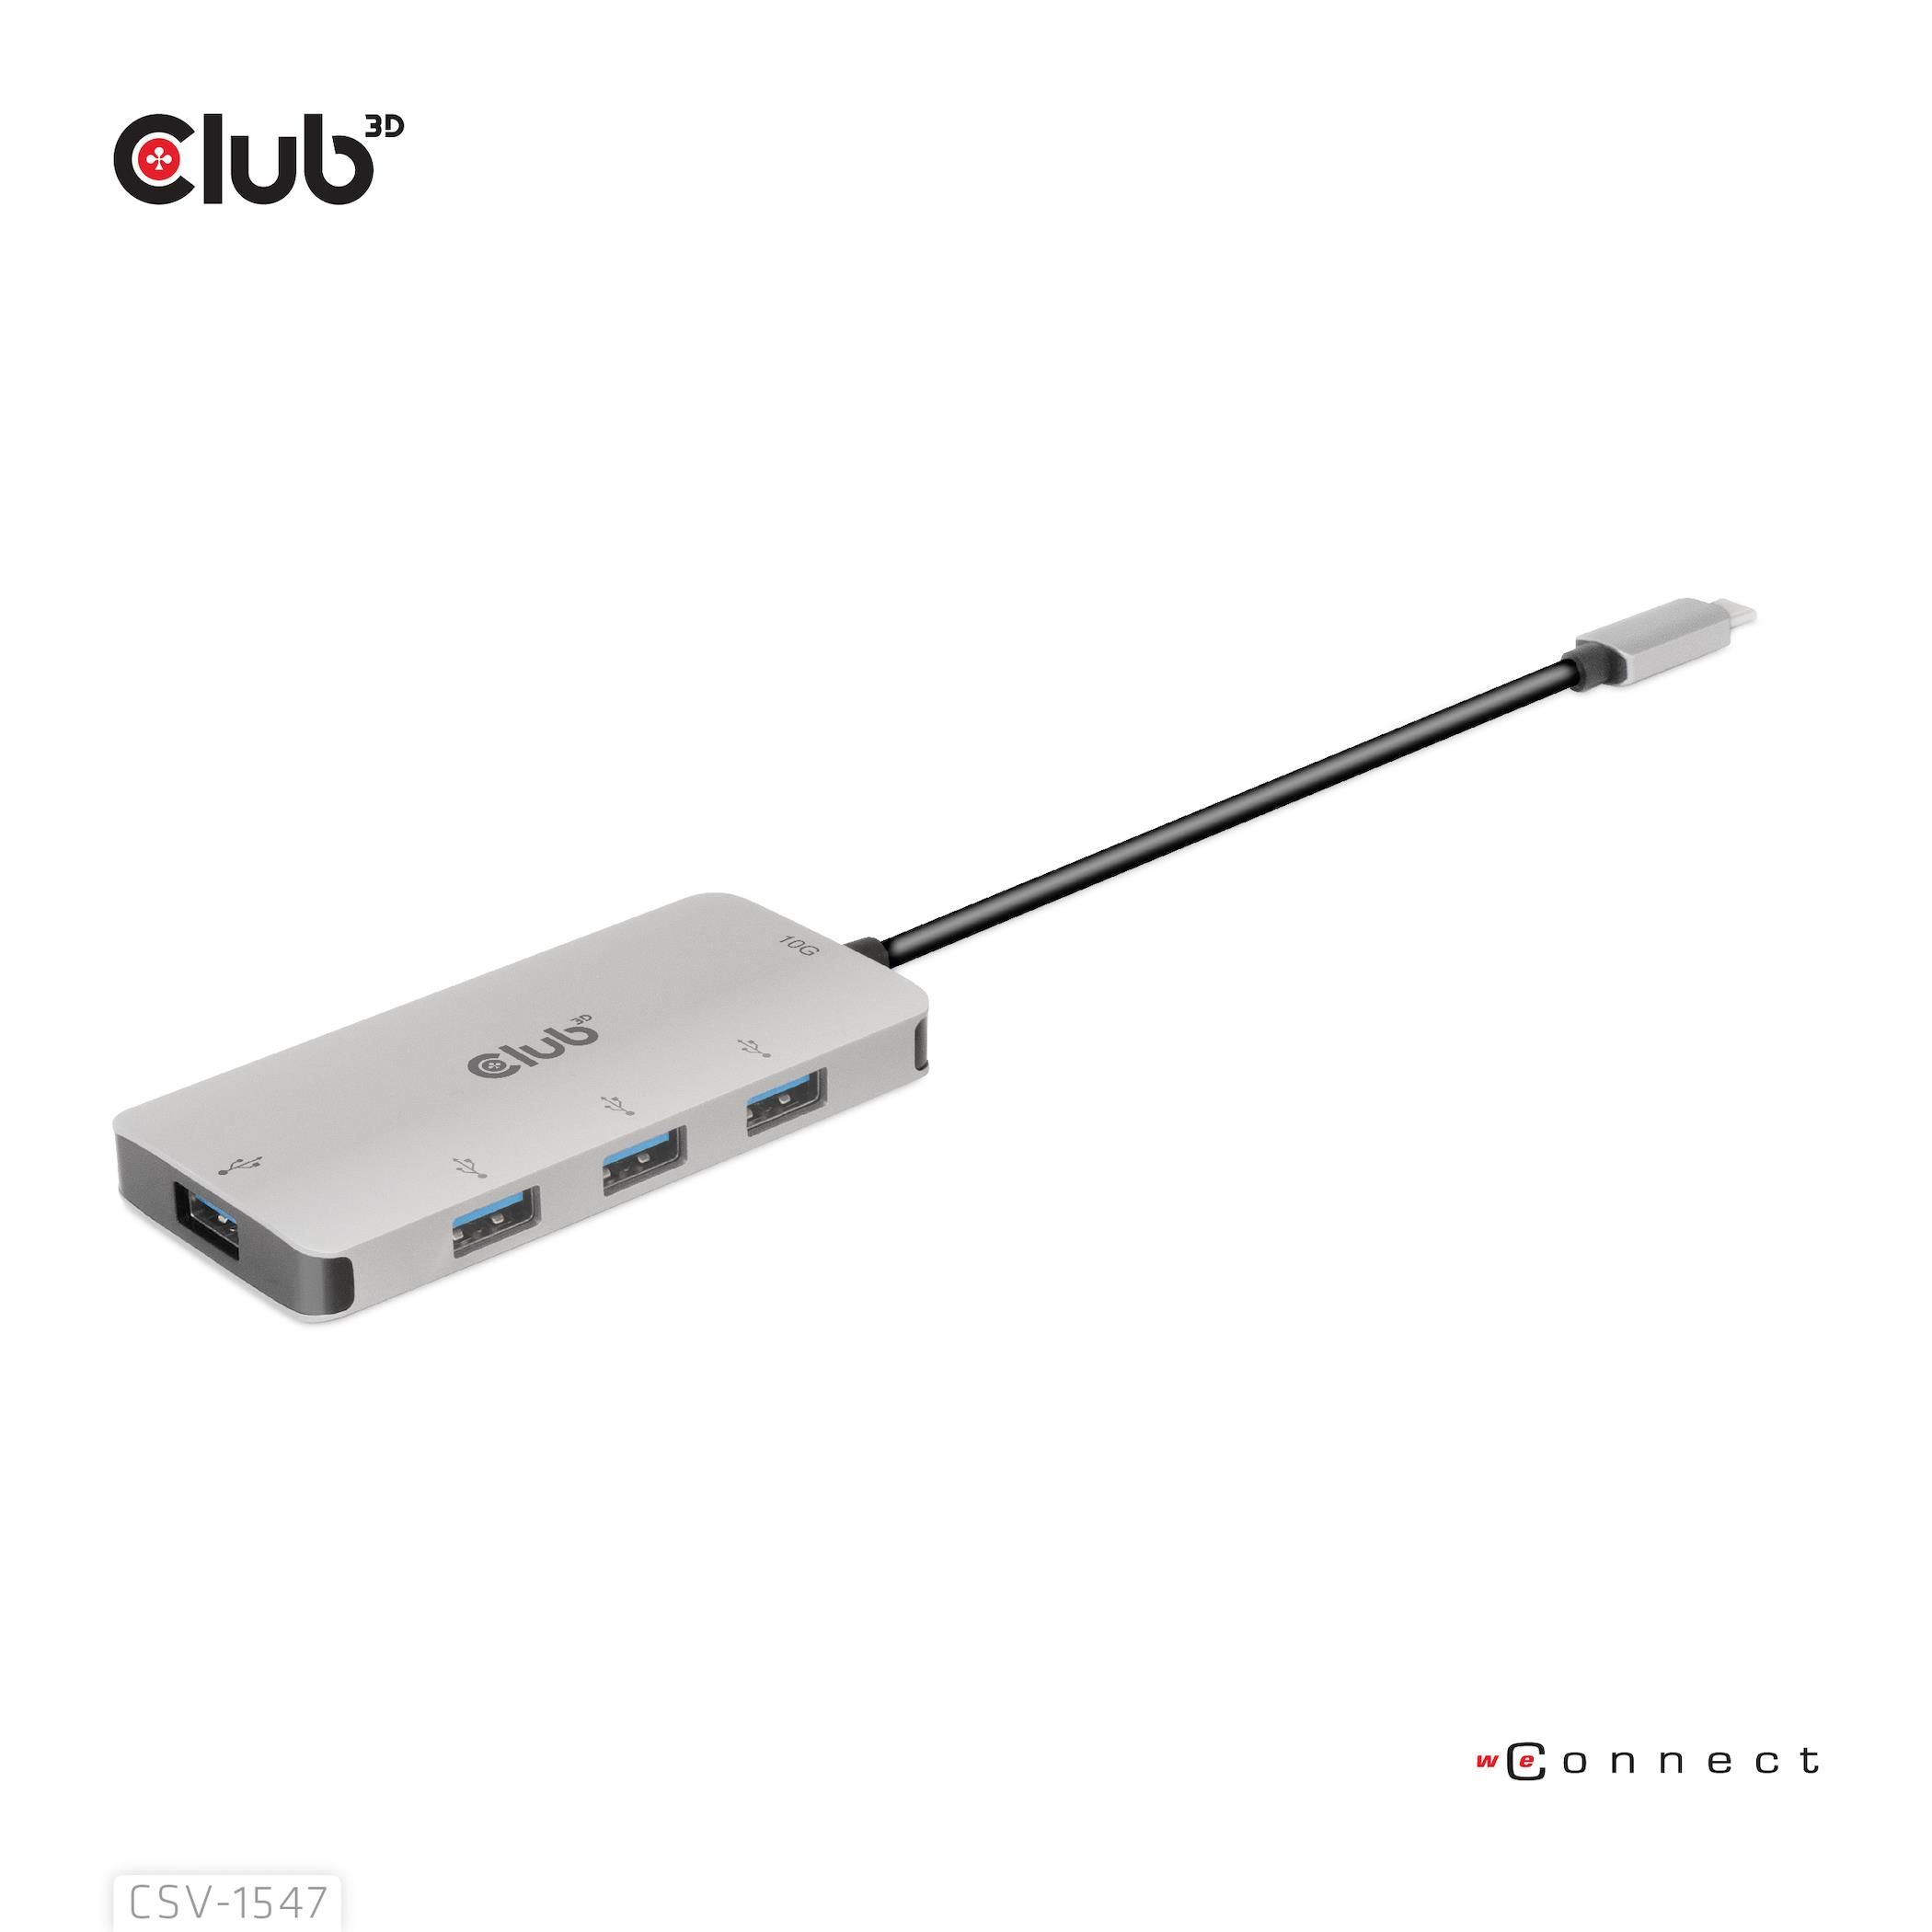 Club3d CSV-1547 Hub Di